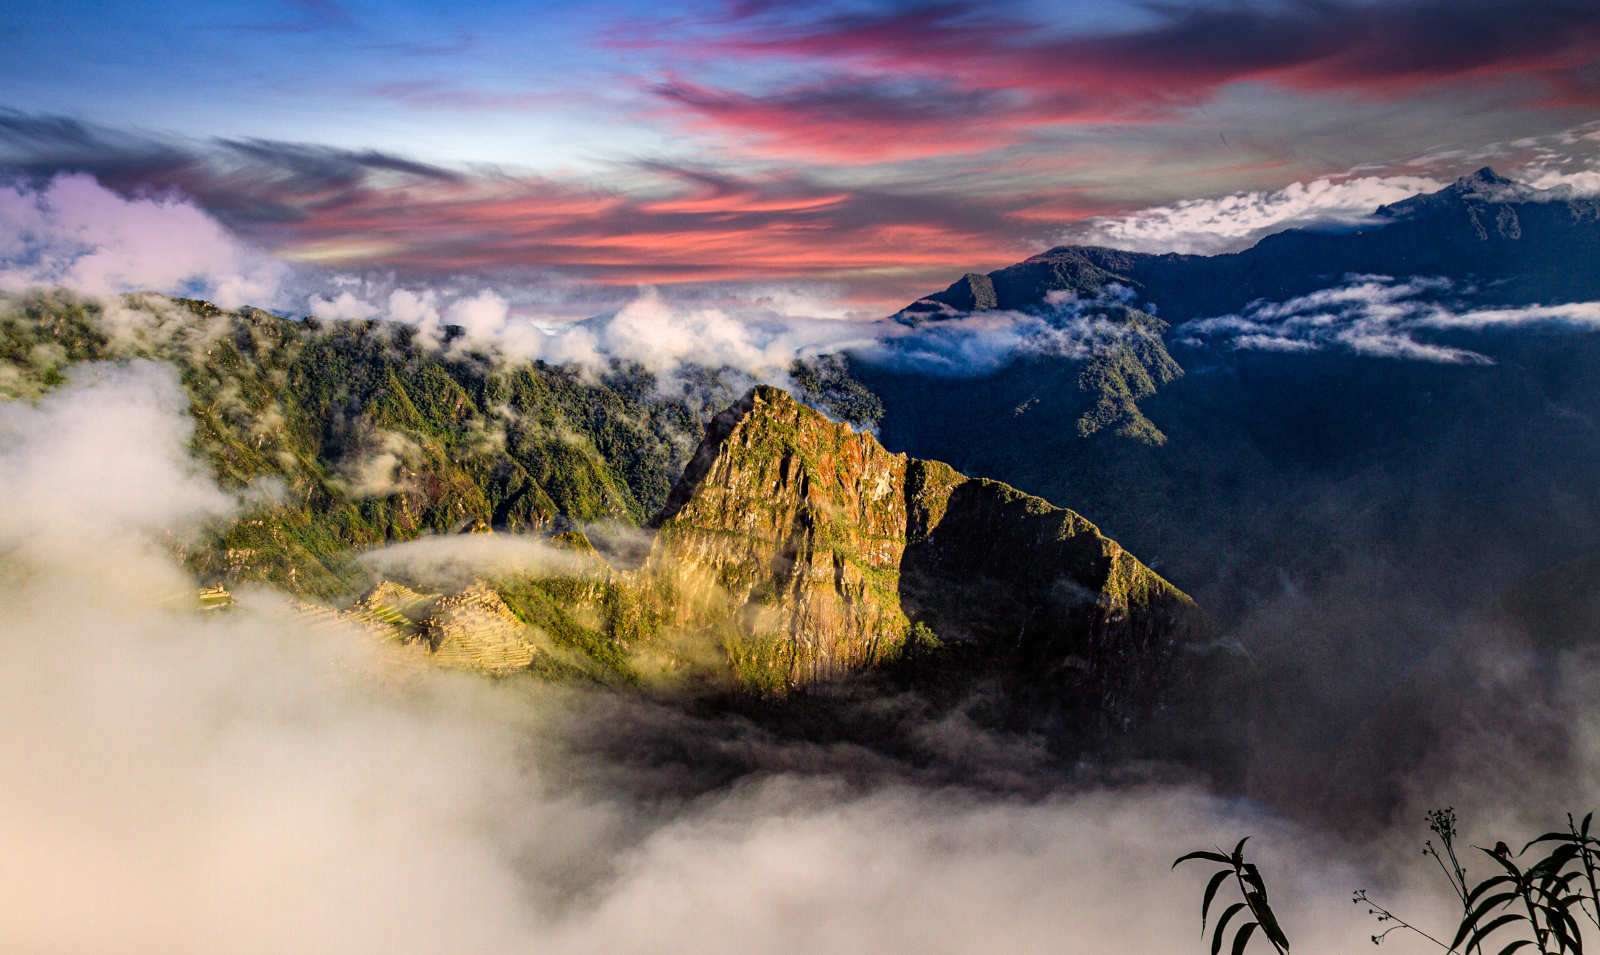 Vilcanota Valley view - Wayna Picchu and Machu Picchu at Sunrise